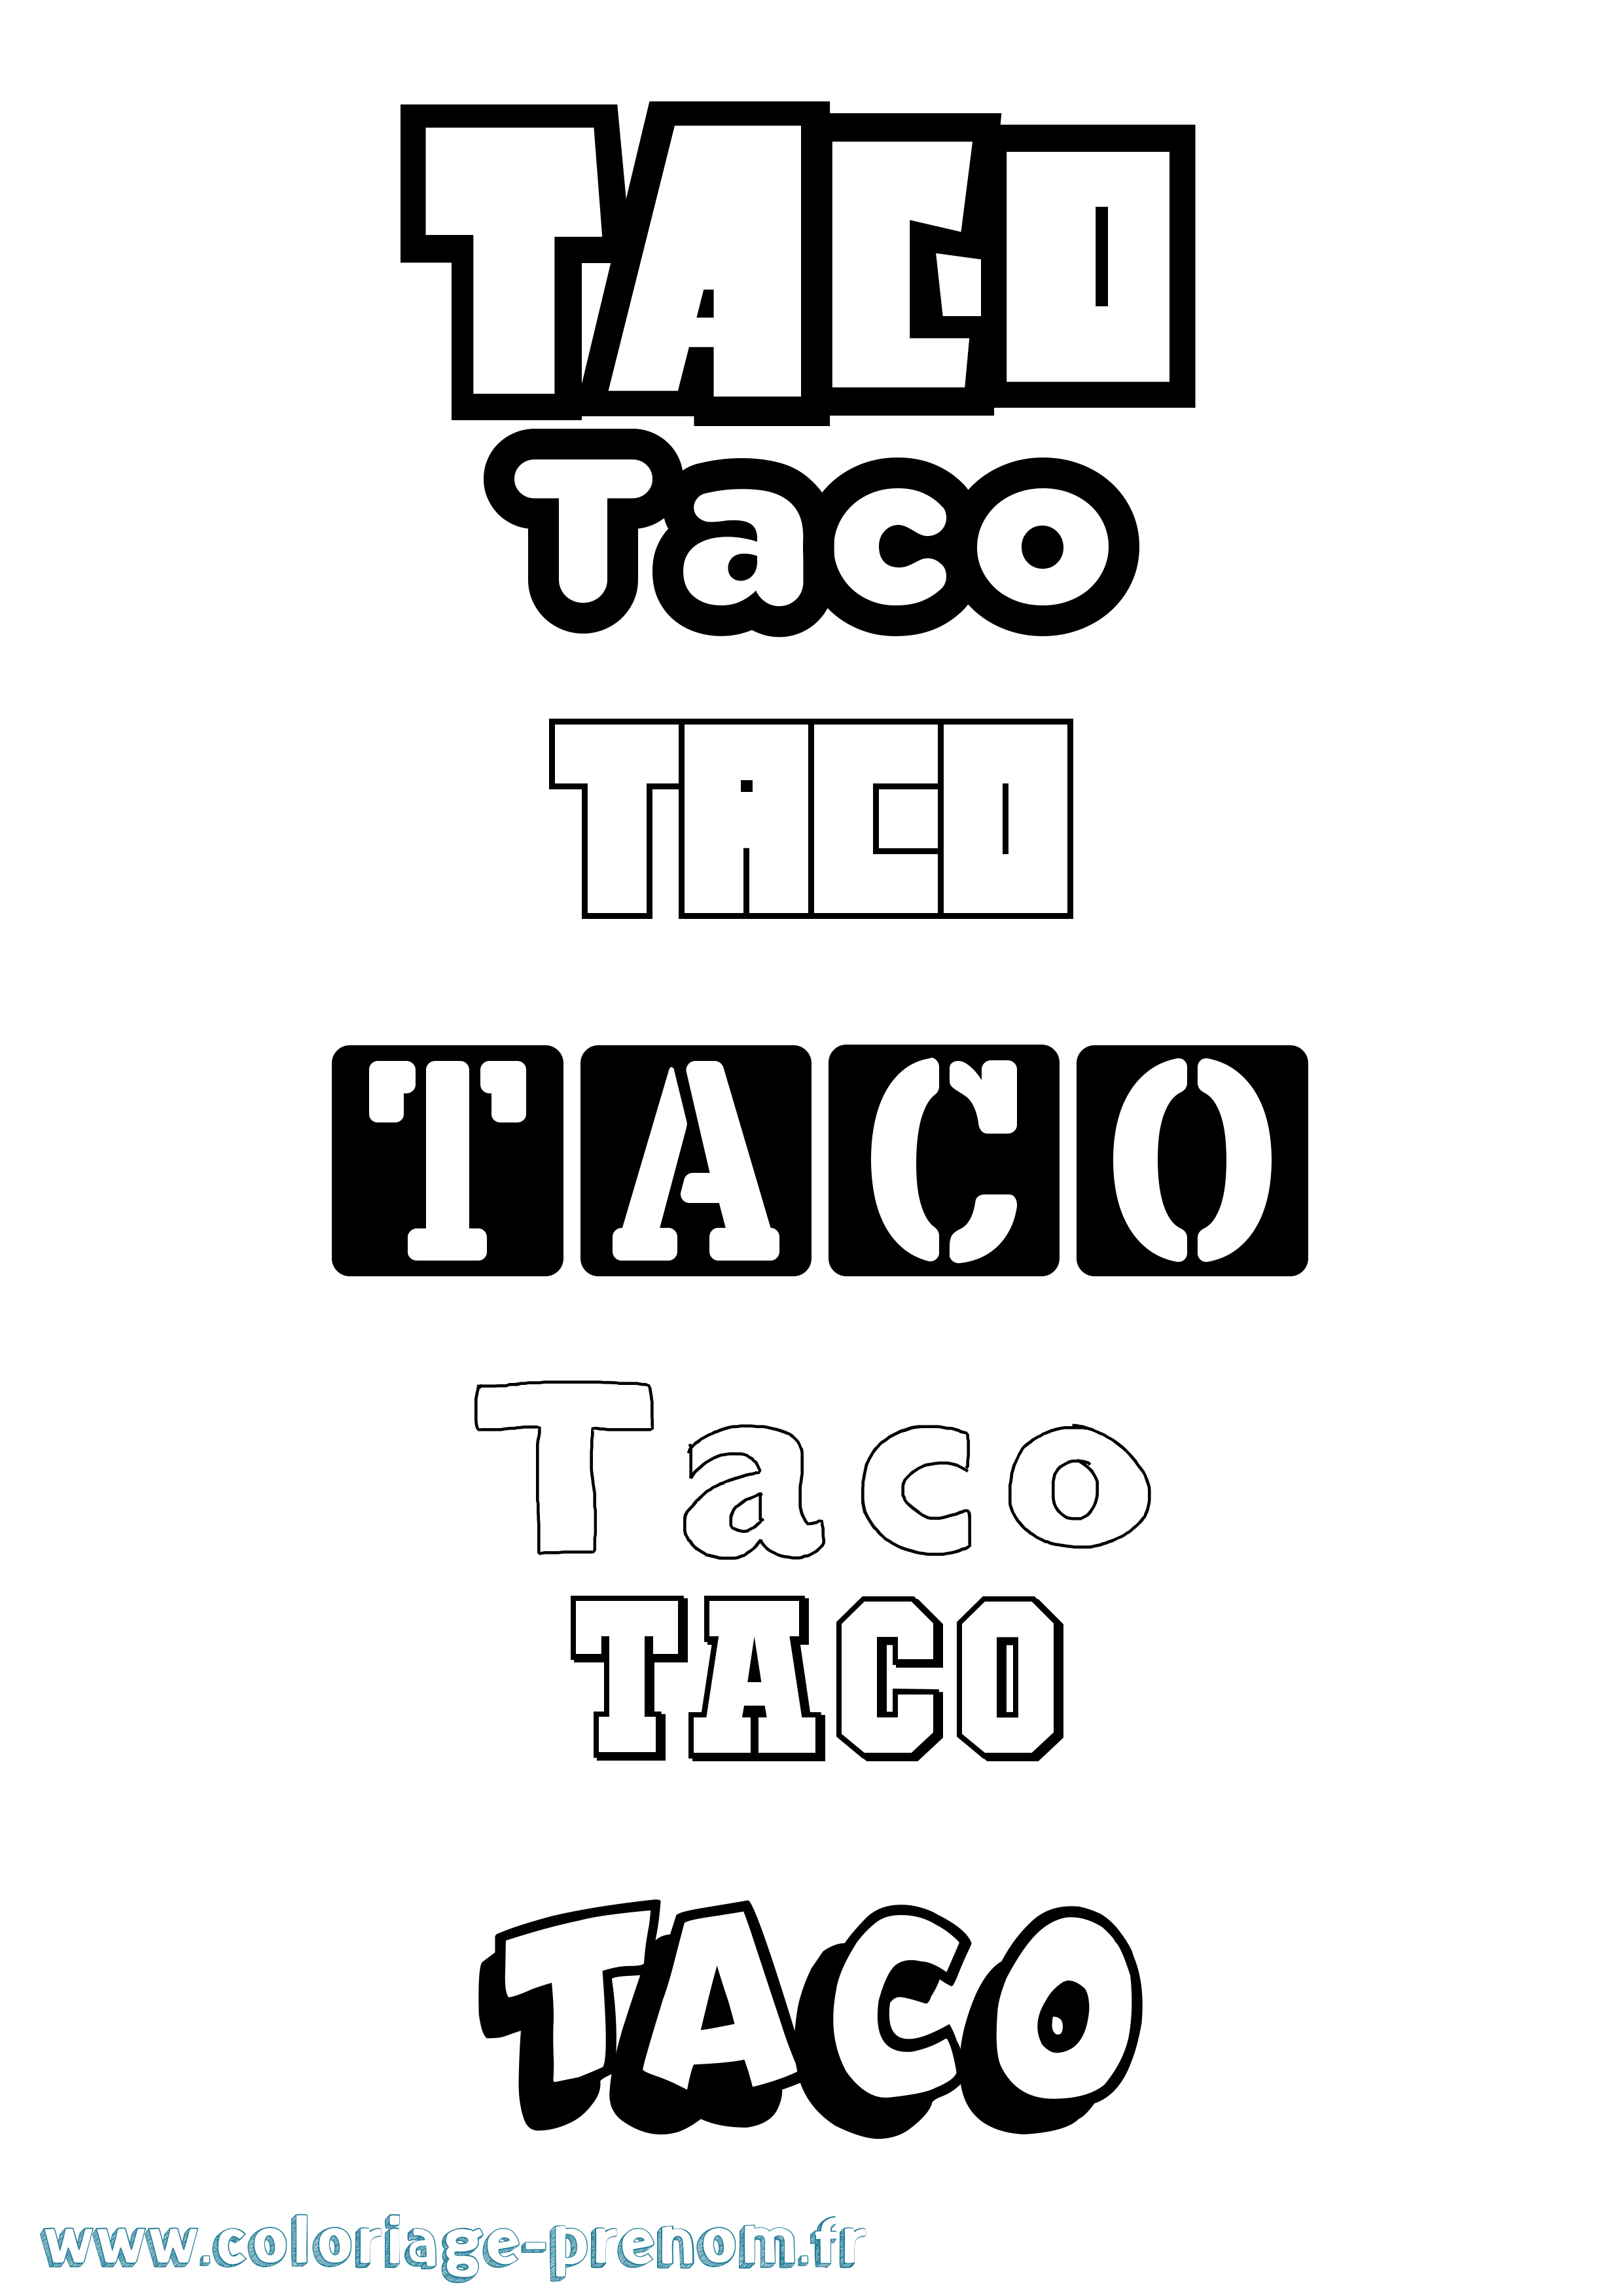 Coloriage prénom Taco Simple